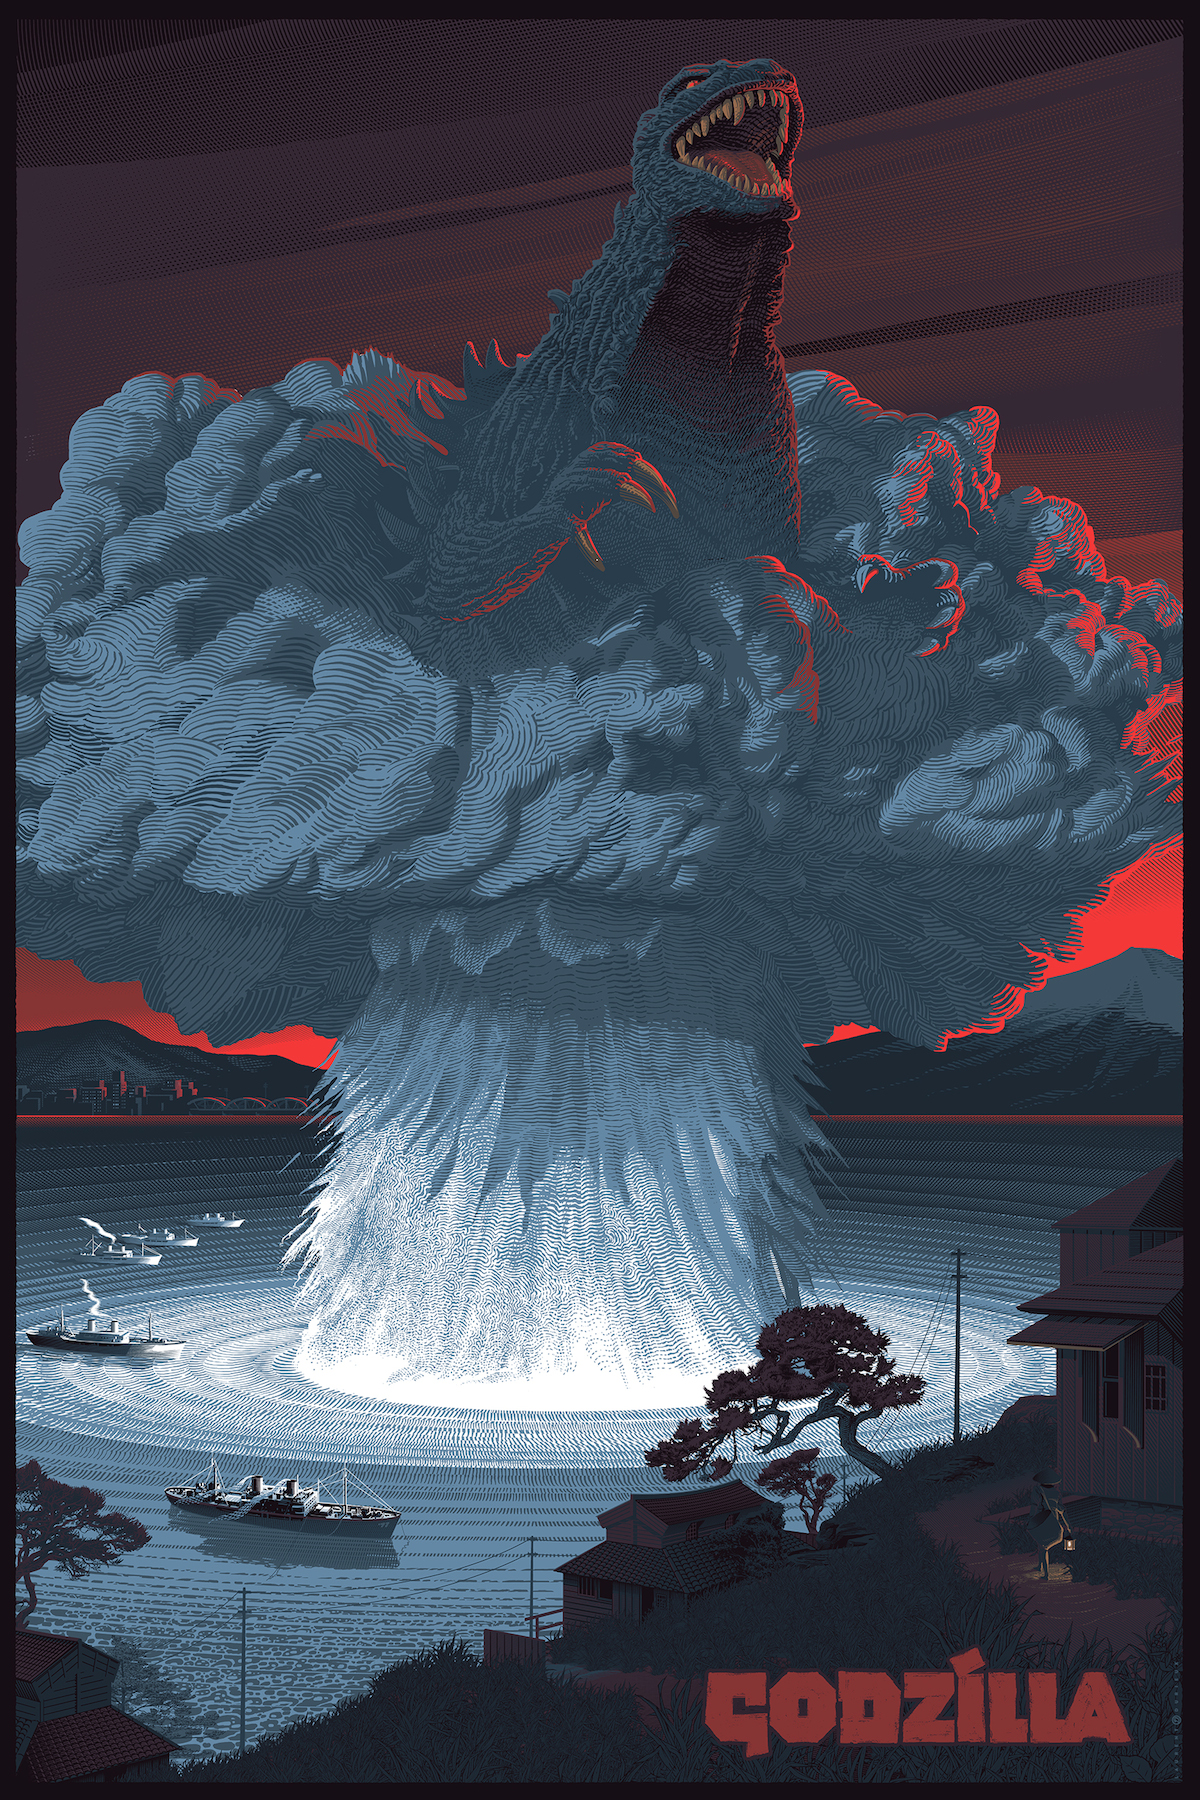 Godzilla Retro-Futuristic World of Laurent Durieux